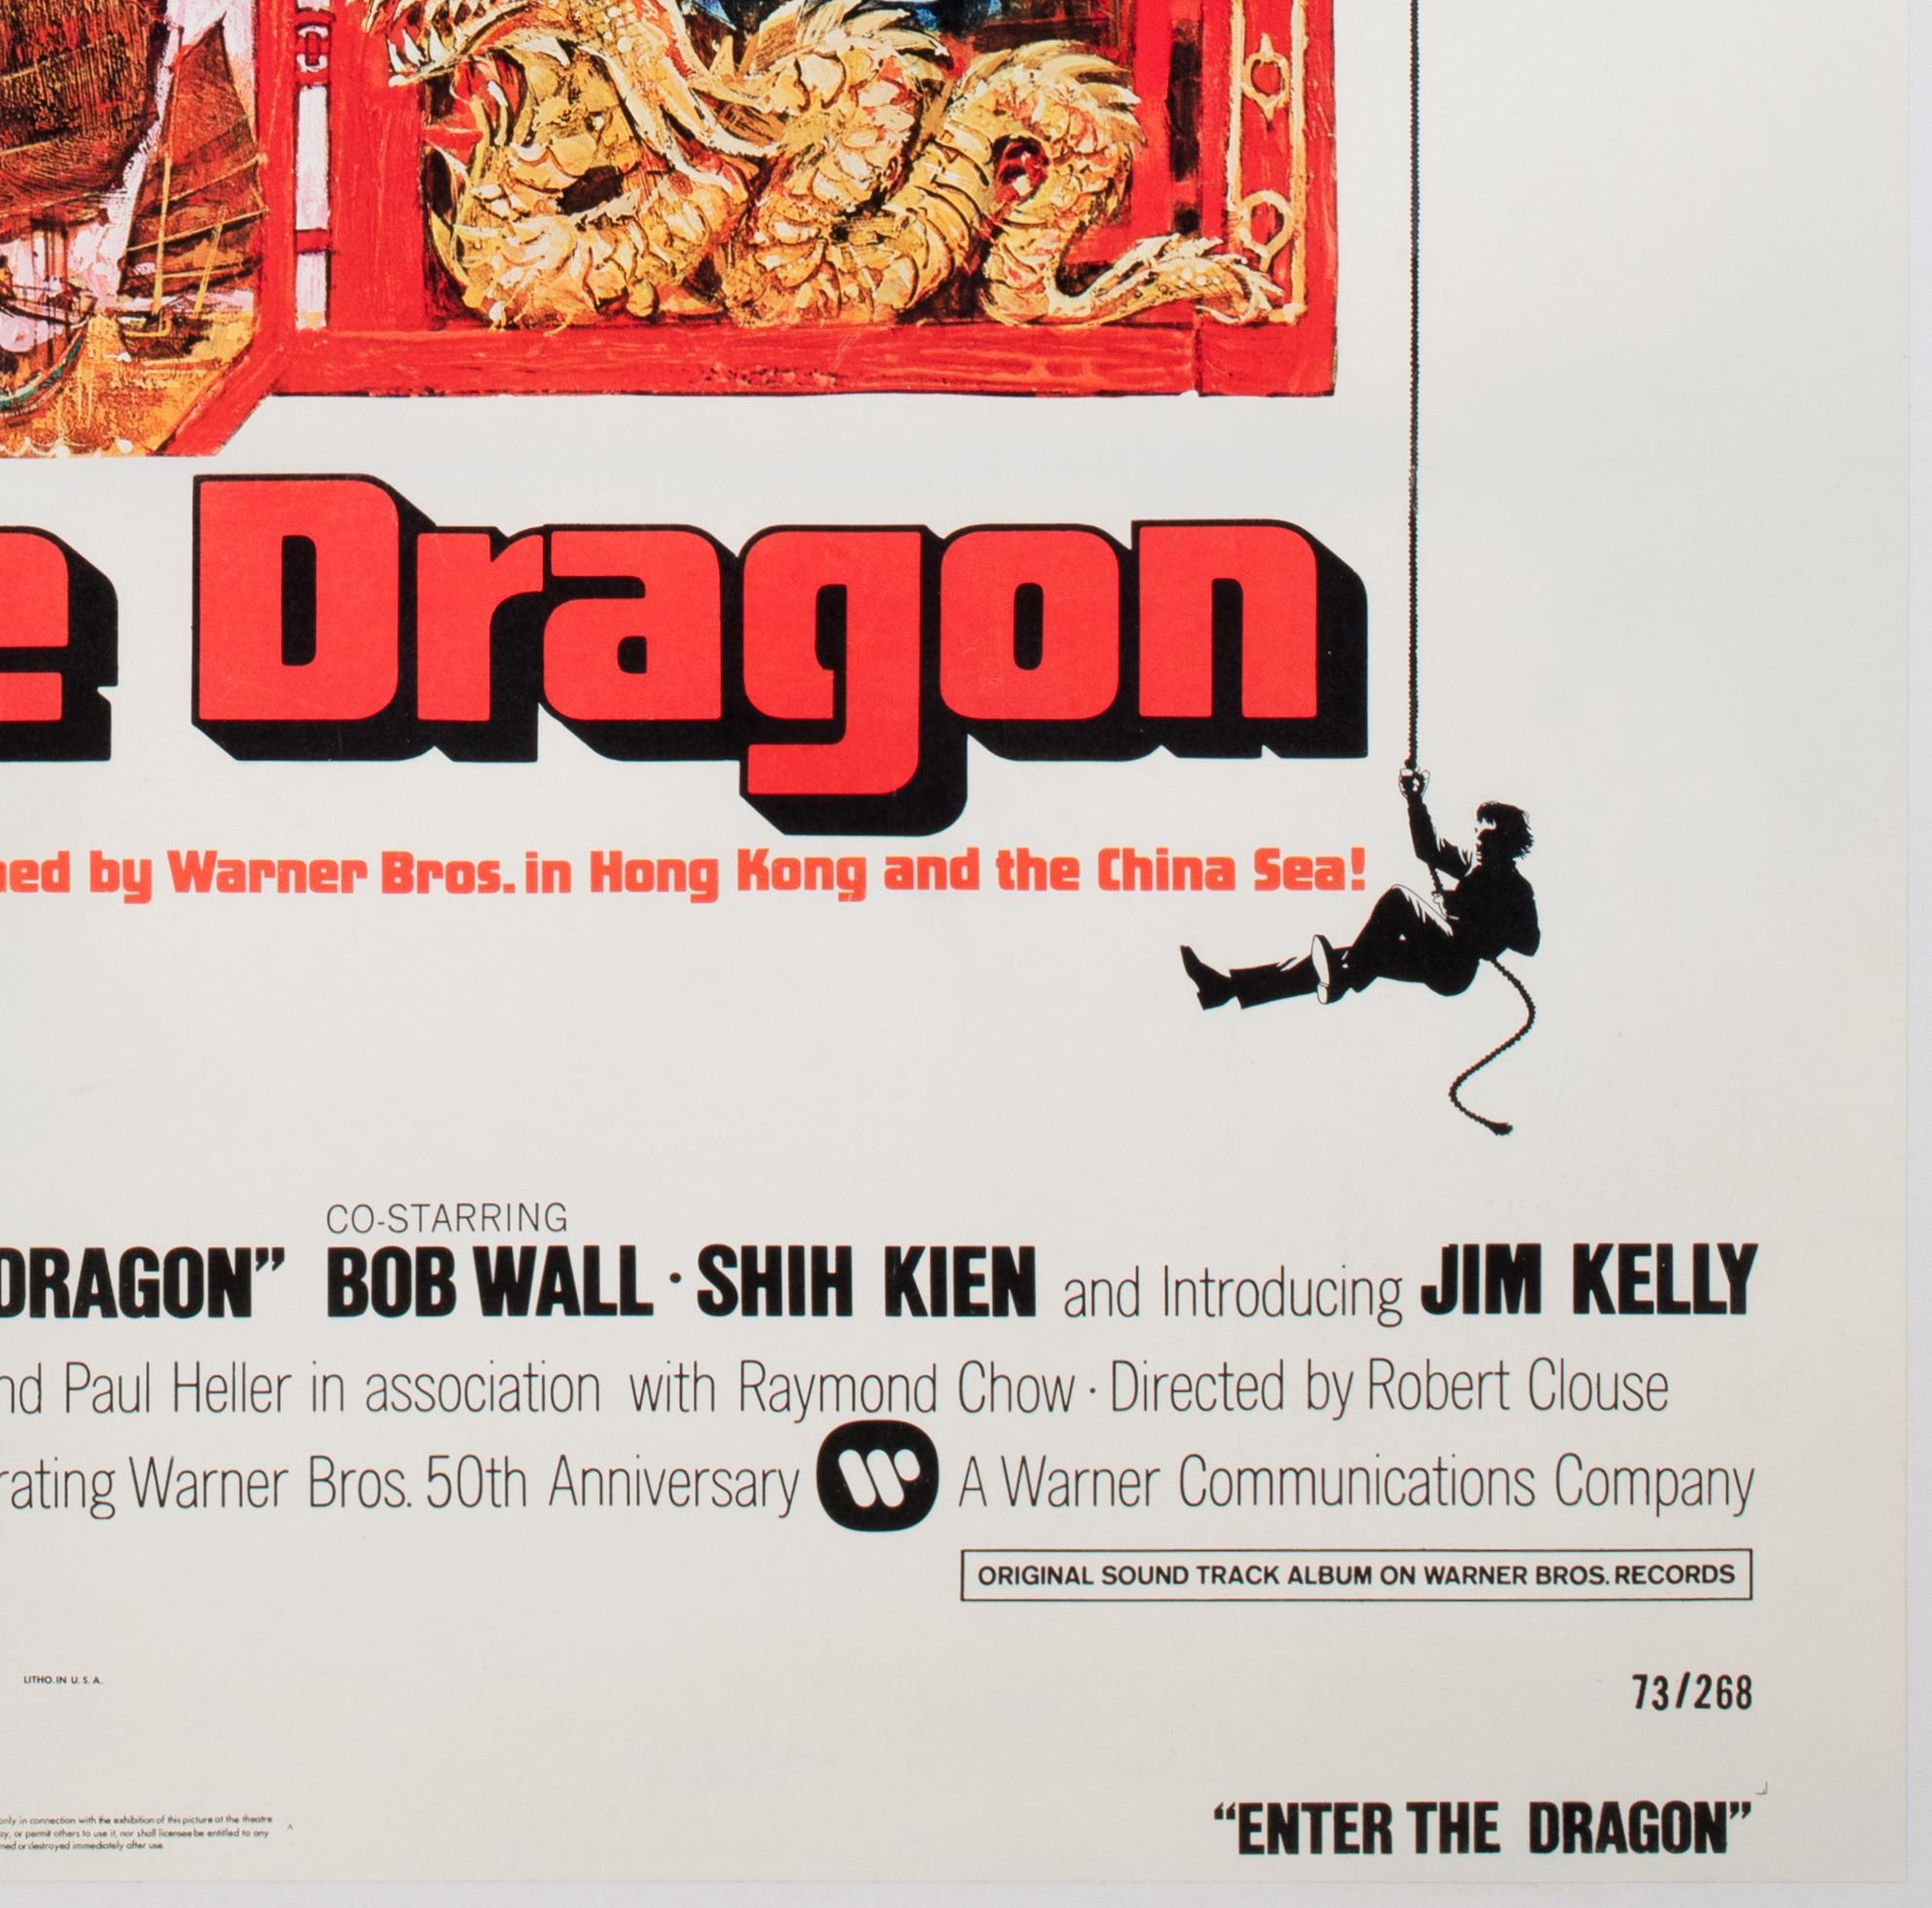 20th Century Enter the Dragon 1973 US 1 Sheet Film Movie Poster, Bob Peak For Sale